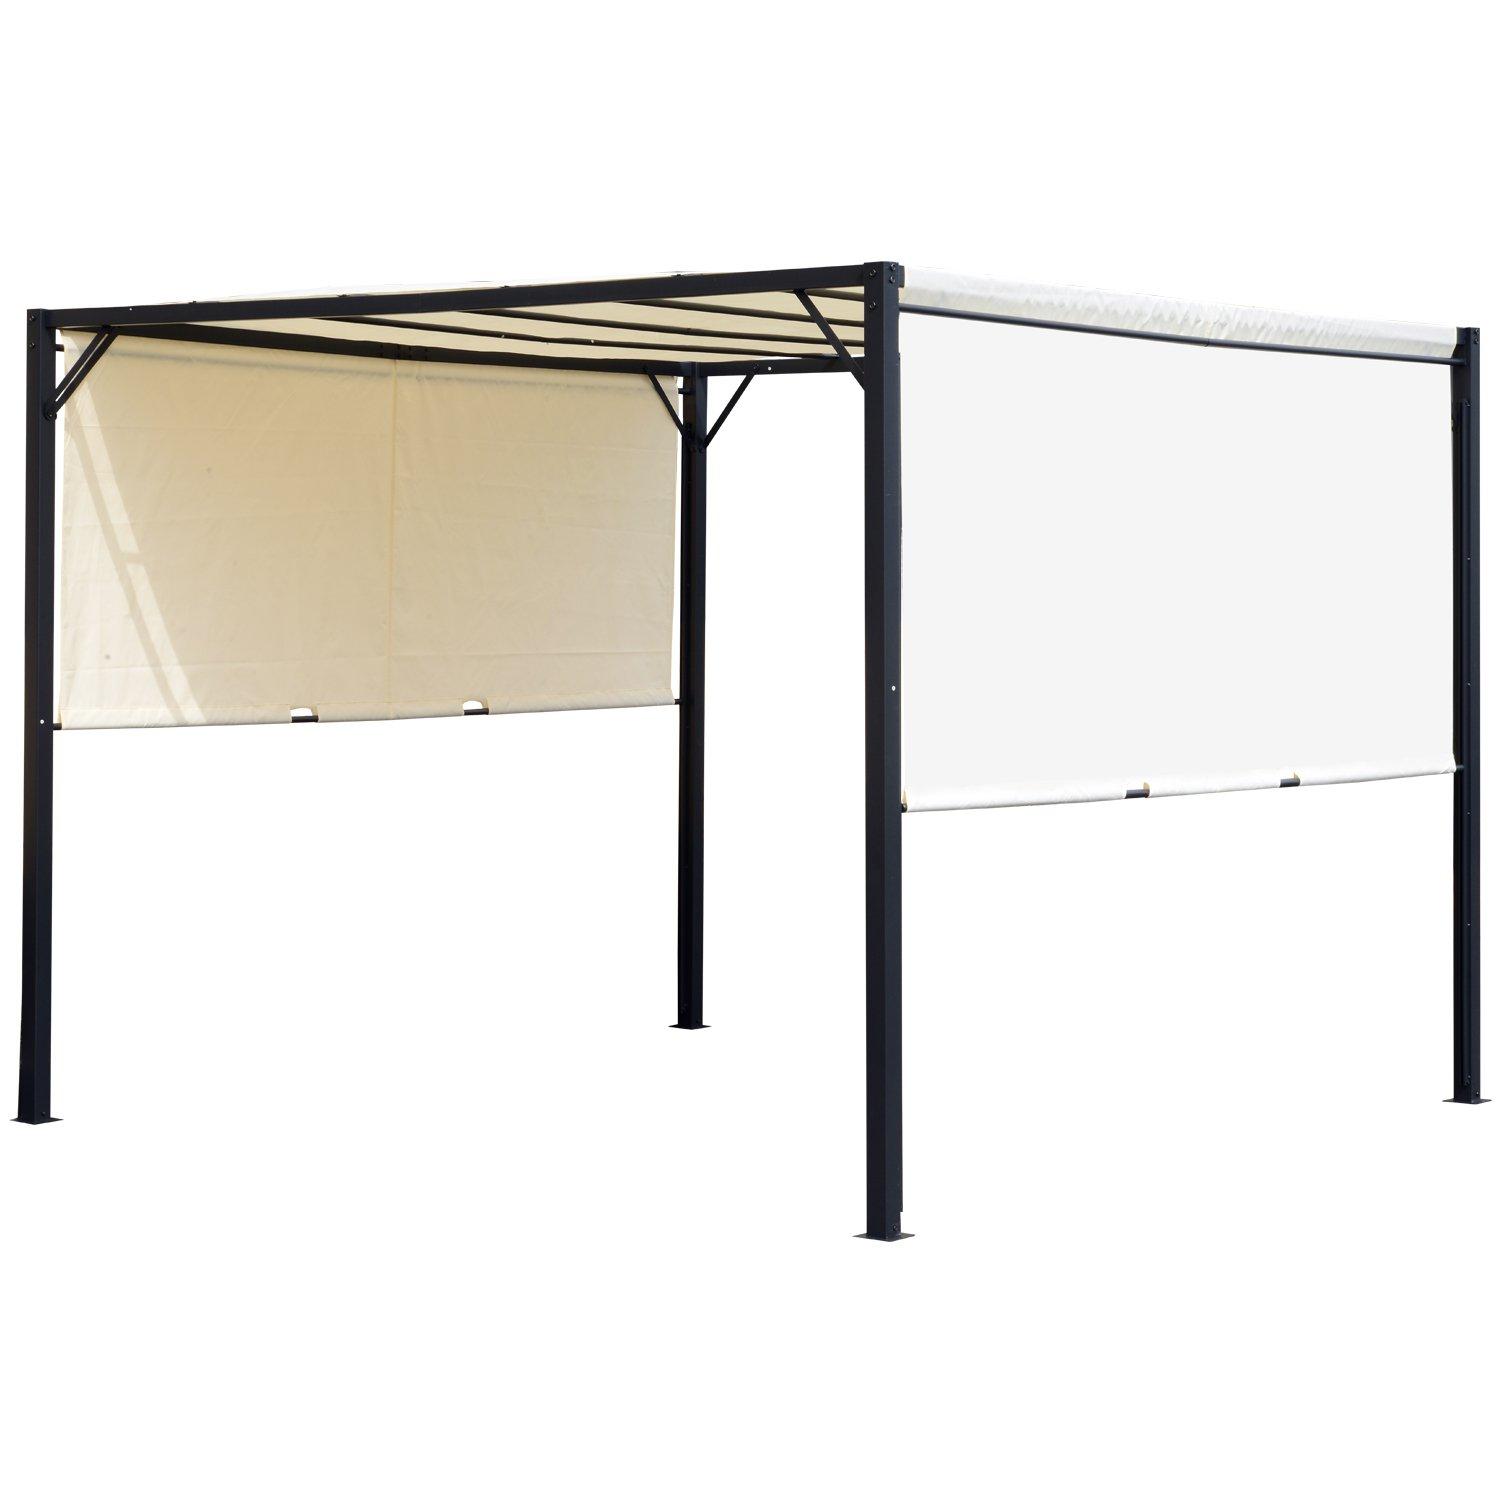 3 x 3m Pergola Metal Gazebo Outdoor Sun Shade Shelter Canopy